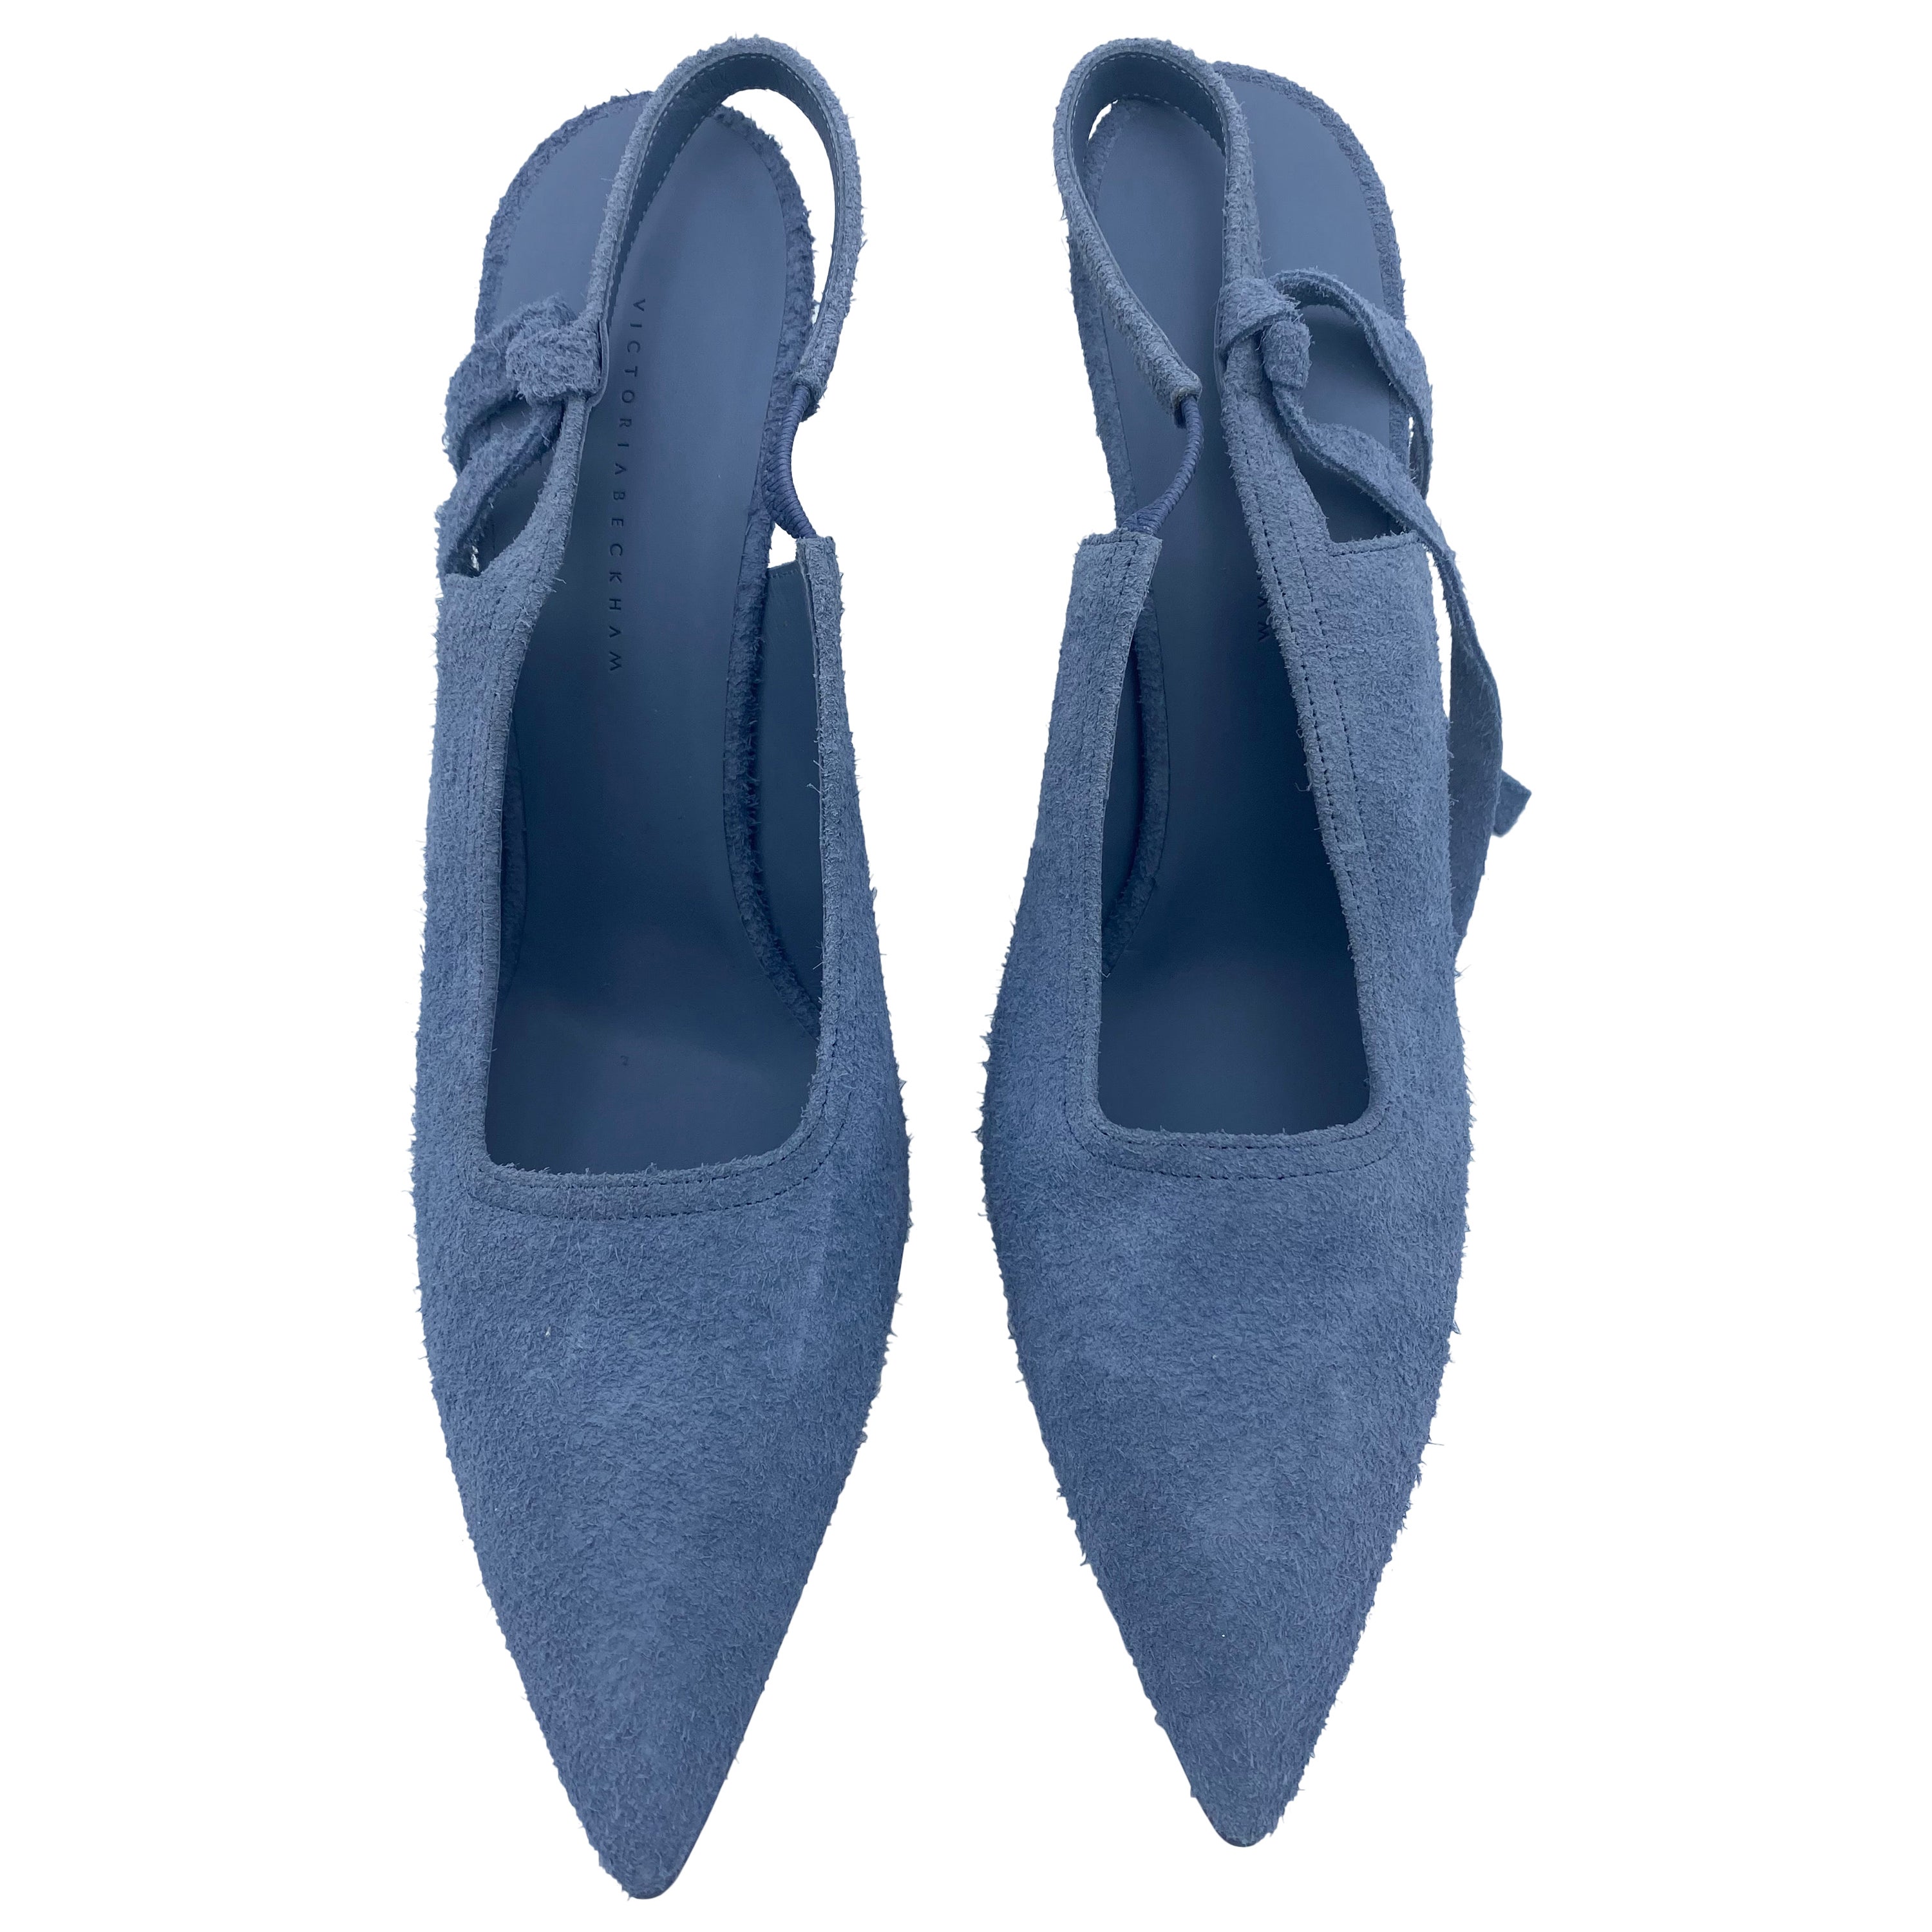 Victoria Beckham Blue Suede High Heels Shoes, Size 41